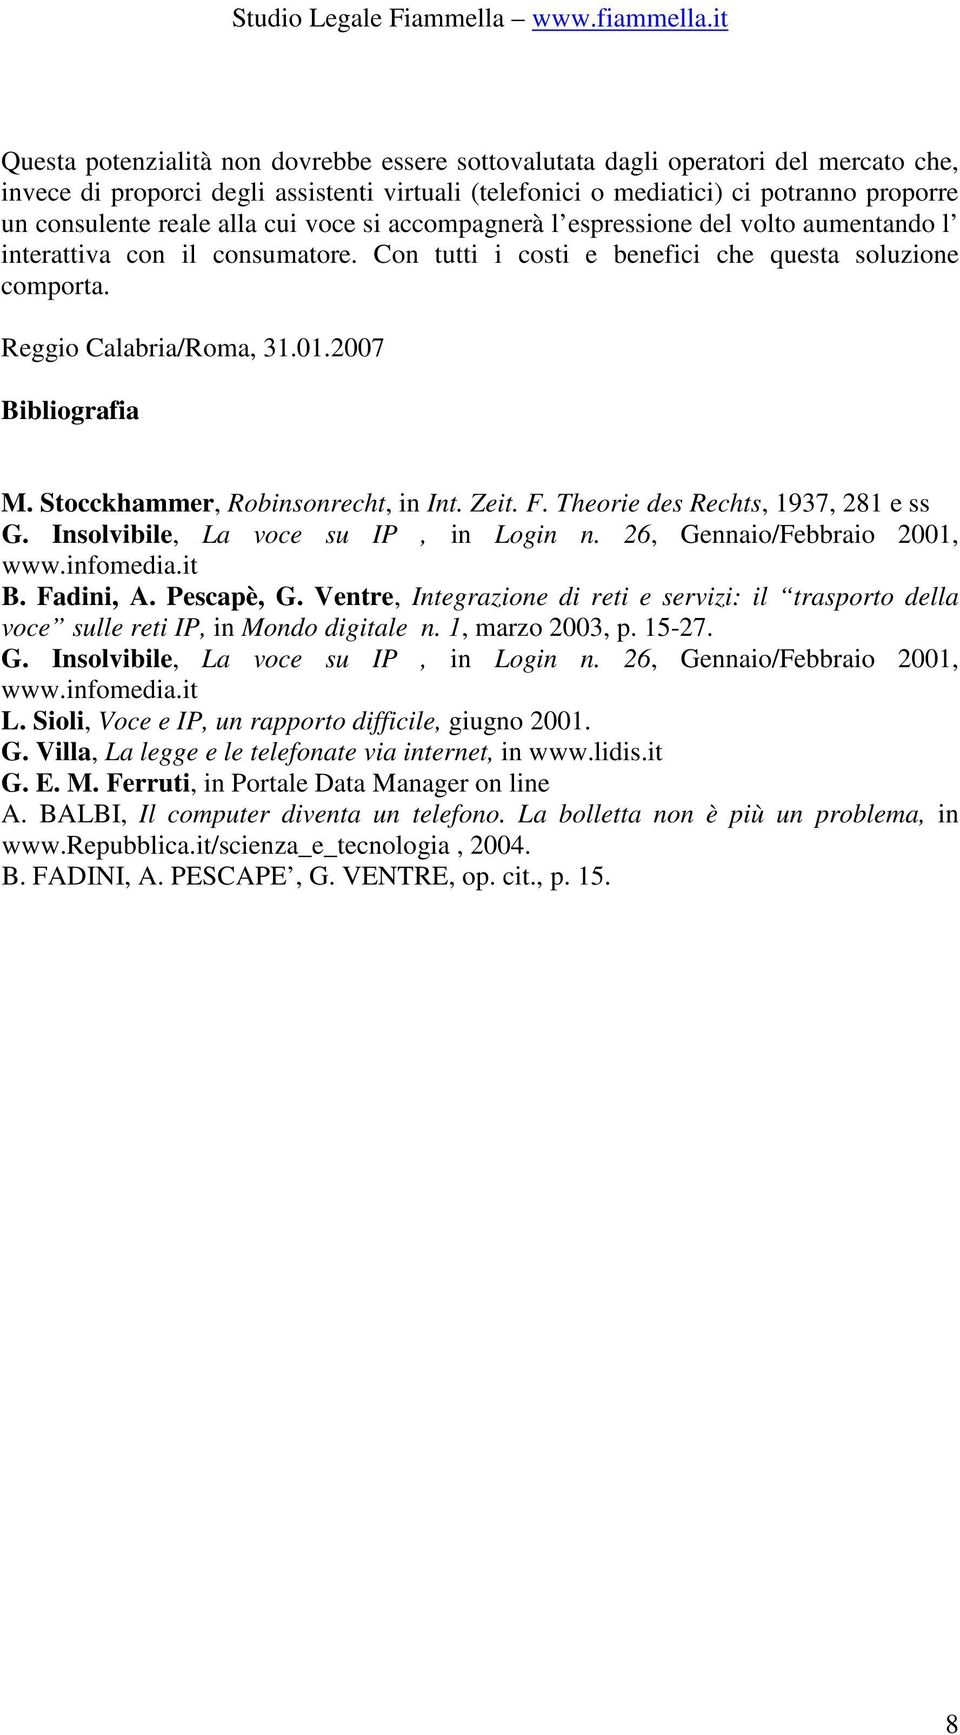 2007 Bibliografia M. Stocckhammer, Robinsonrecht, in Int. Zeit. F. Theorie des Rechts, 1937, 281 e ss G. Insolvibile, La voce su IP, in Login n. 26, Gennaio/Febbraio 2001, www.infomedia.it B.